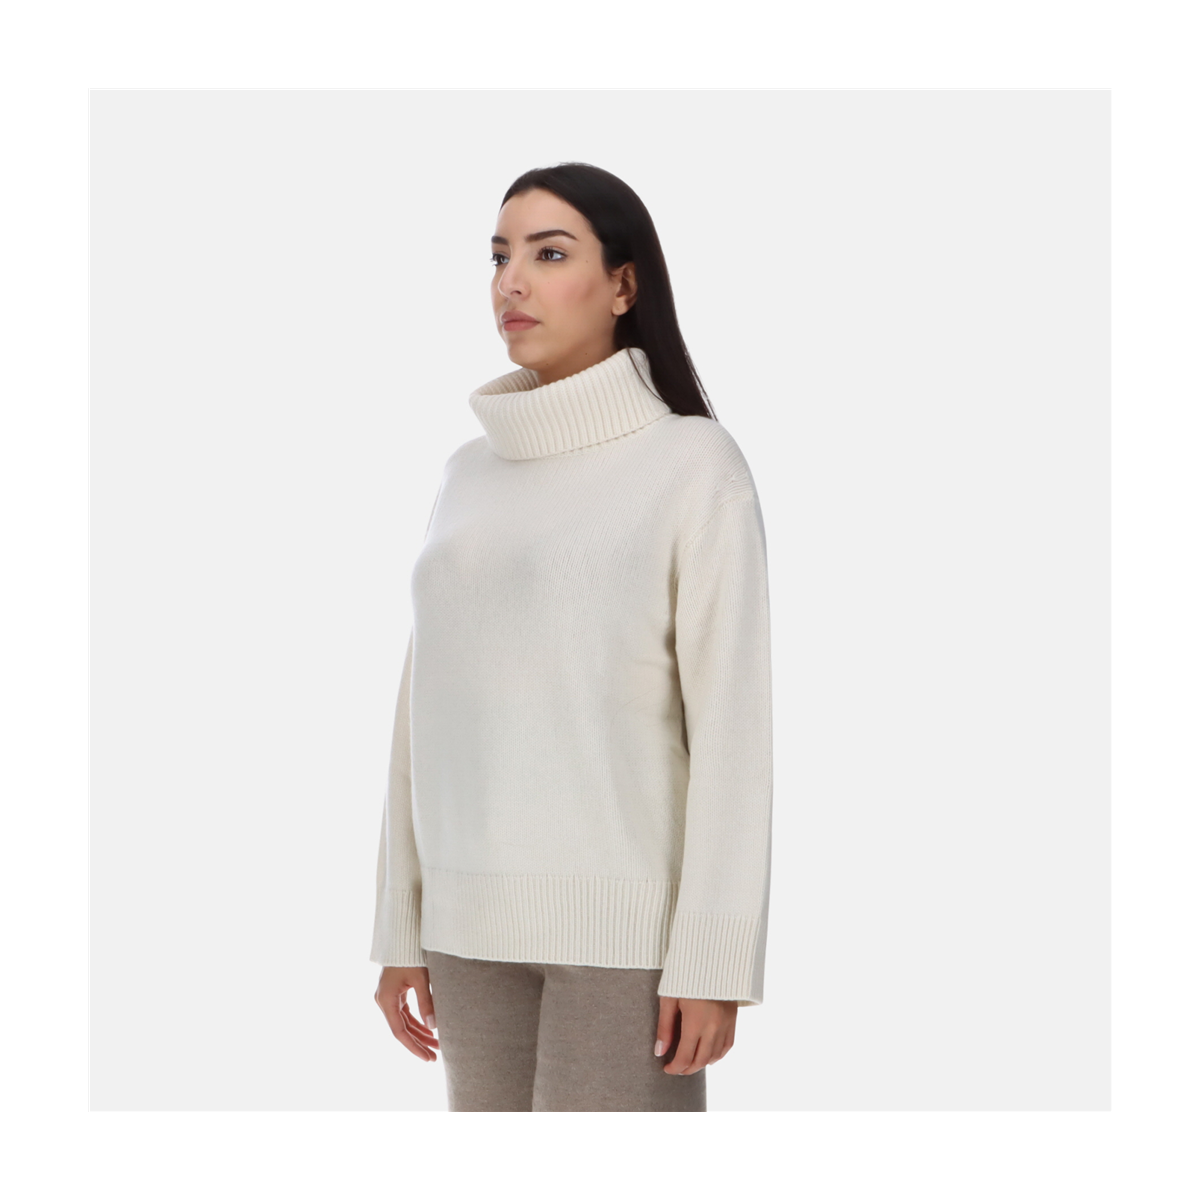 Lisa Yang Holly Turtleneck Sweater